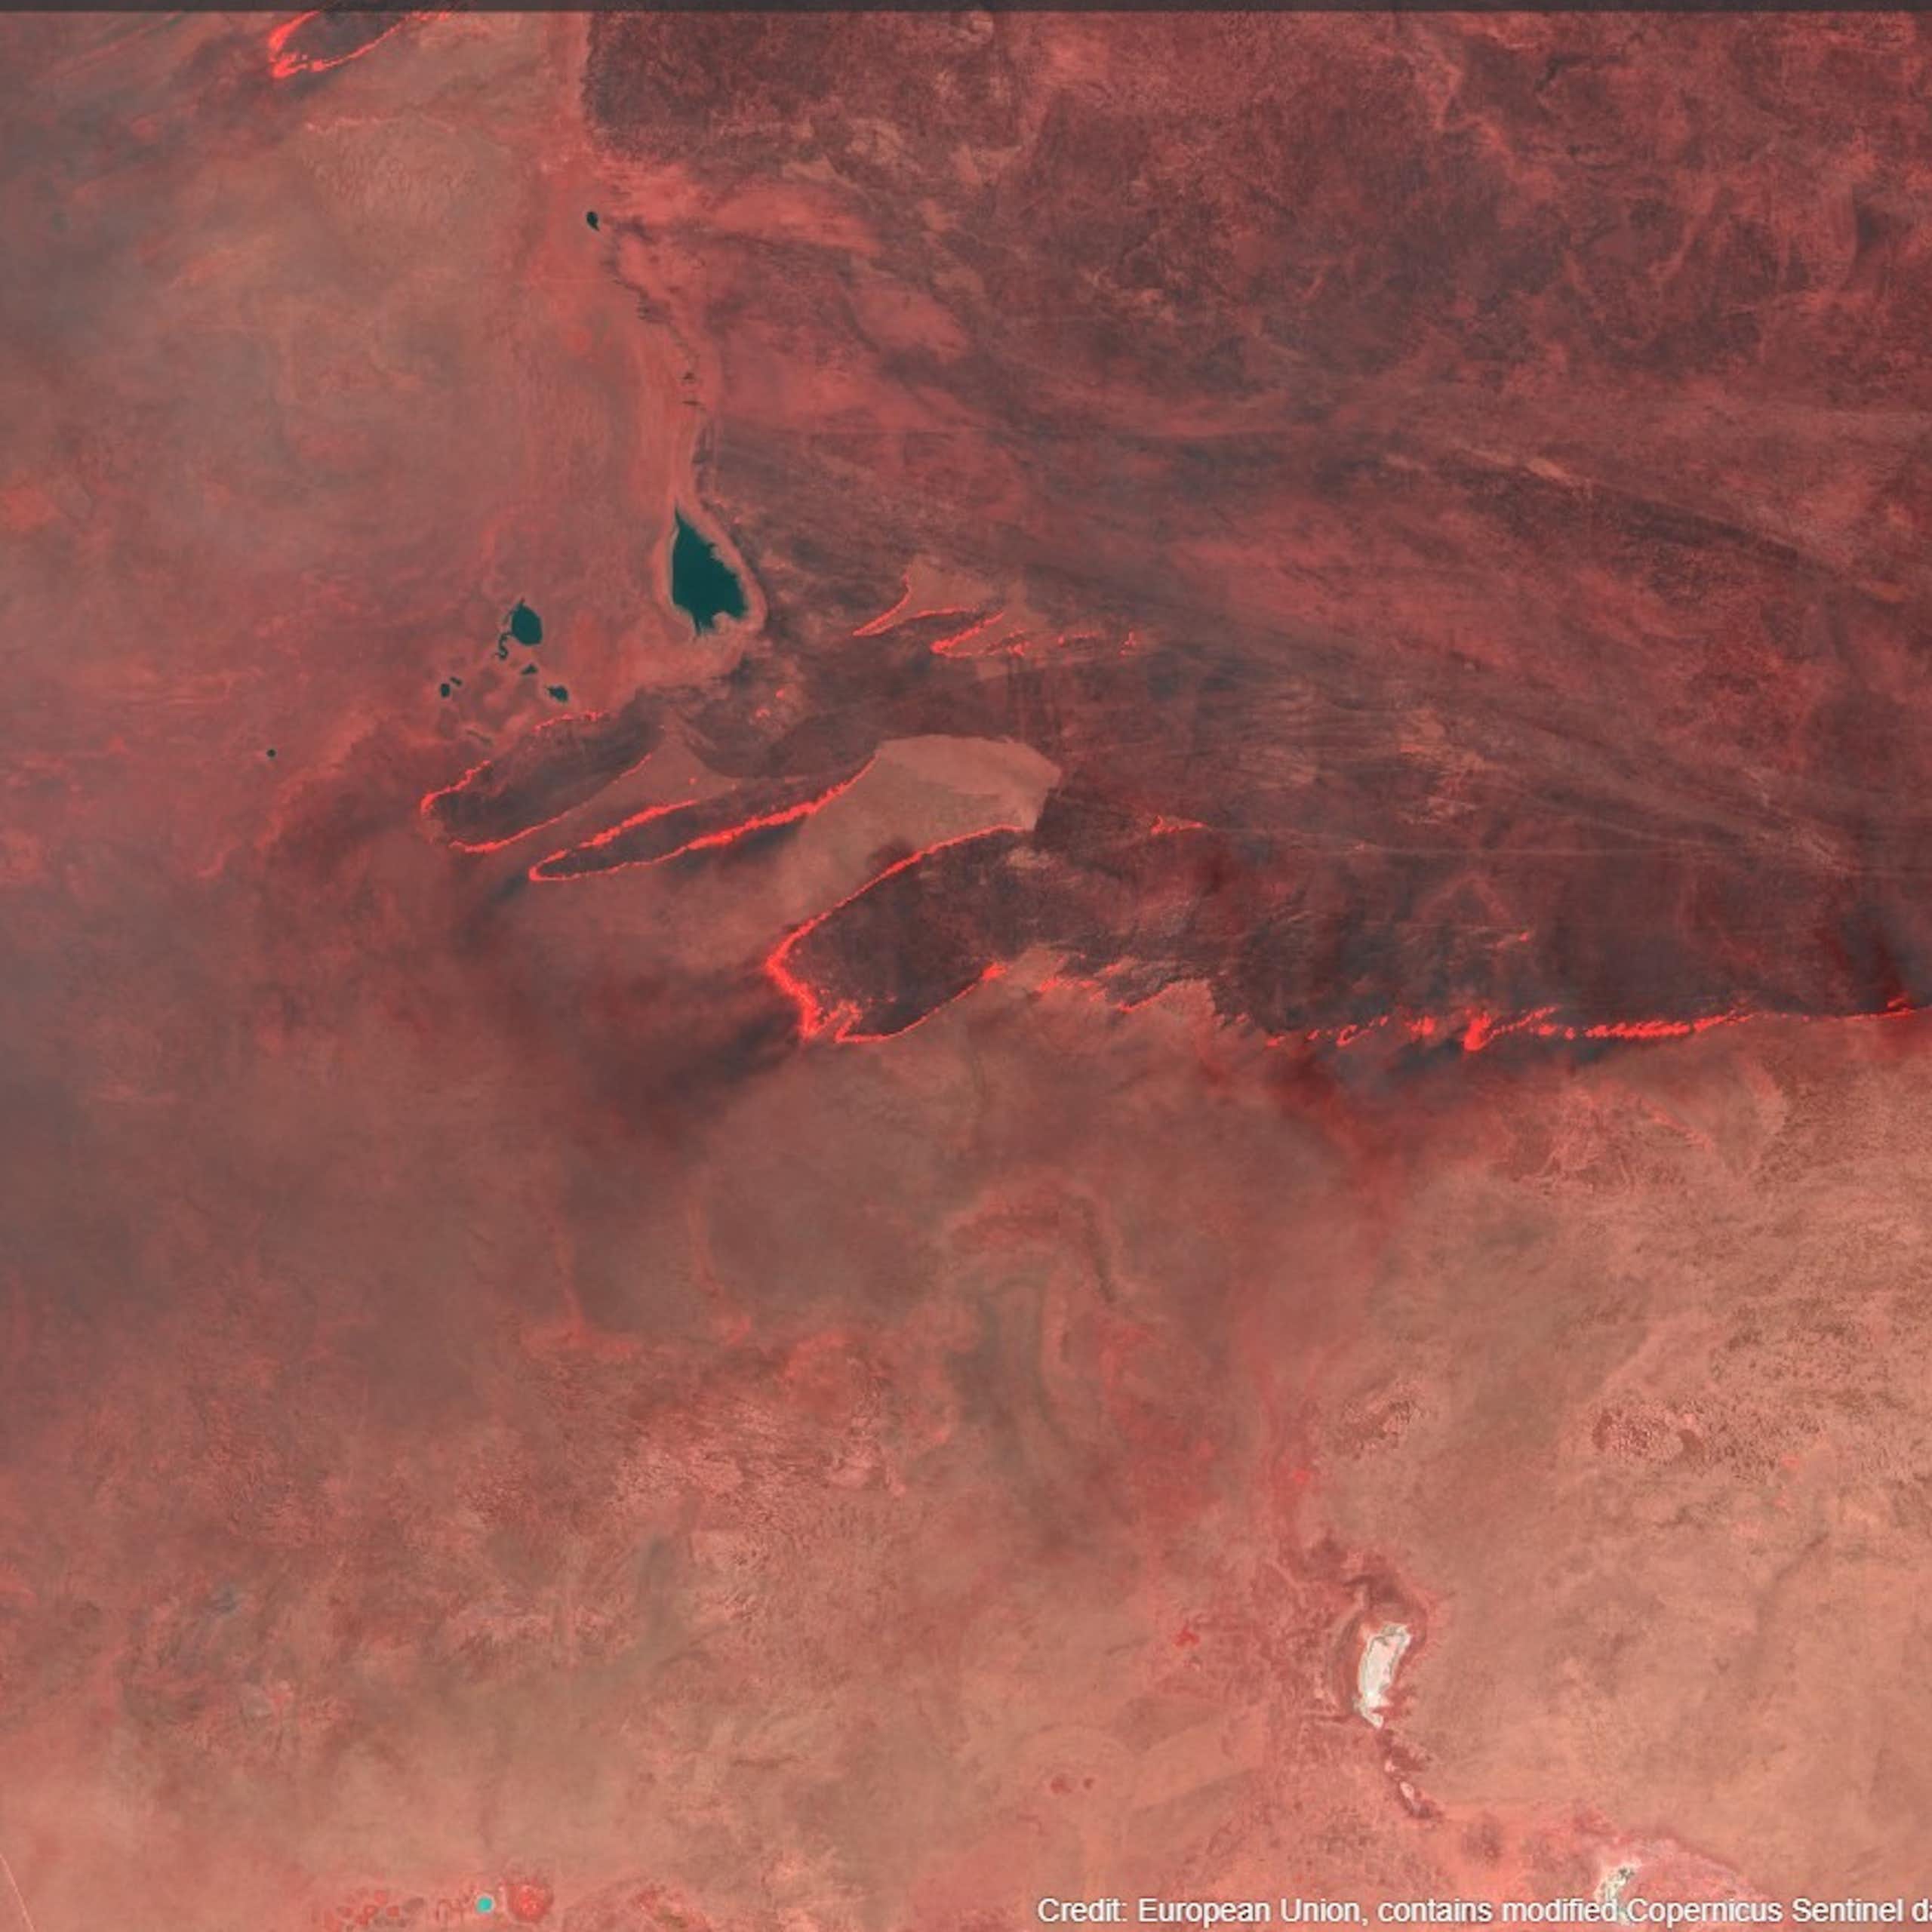 Satellite image showing large fires burning in the desert